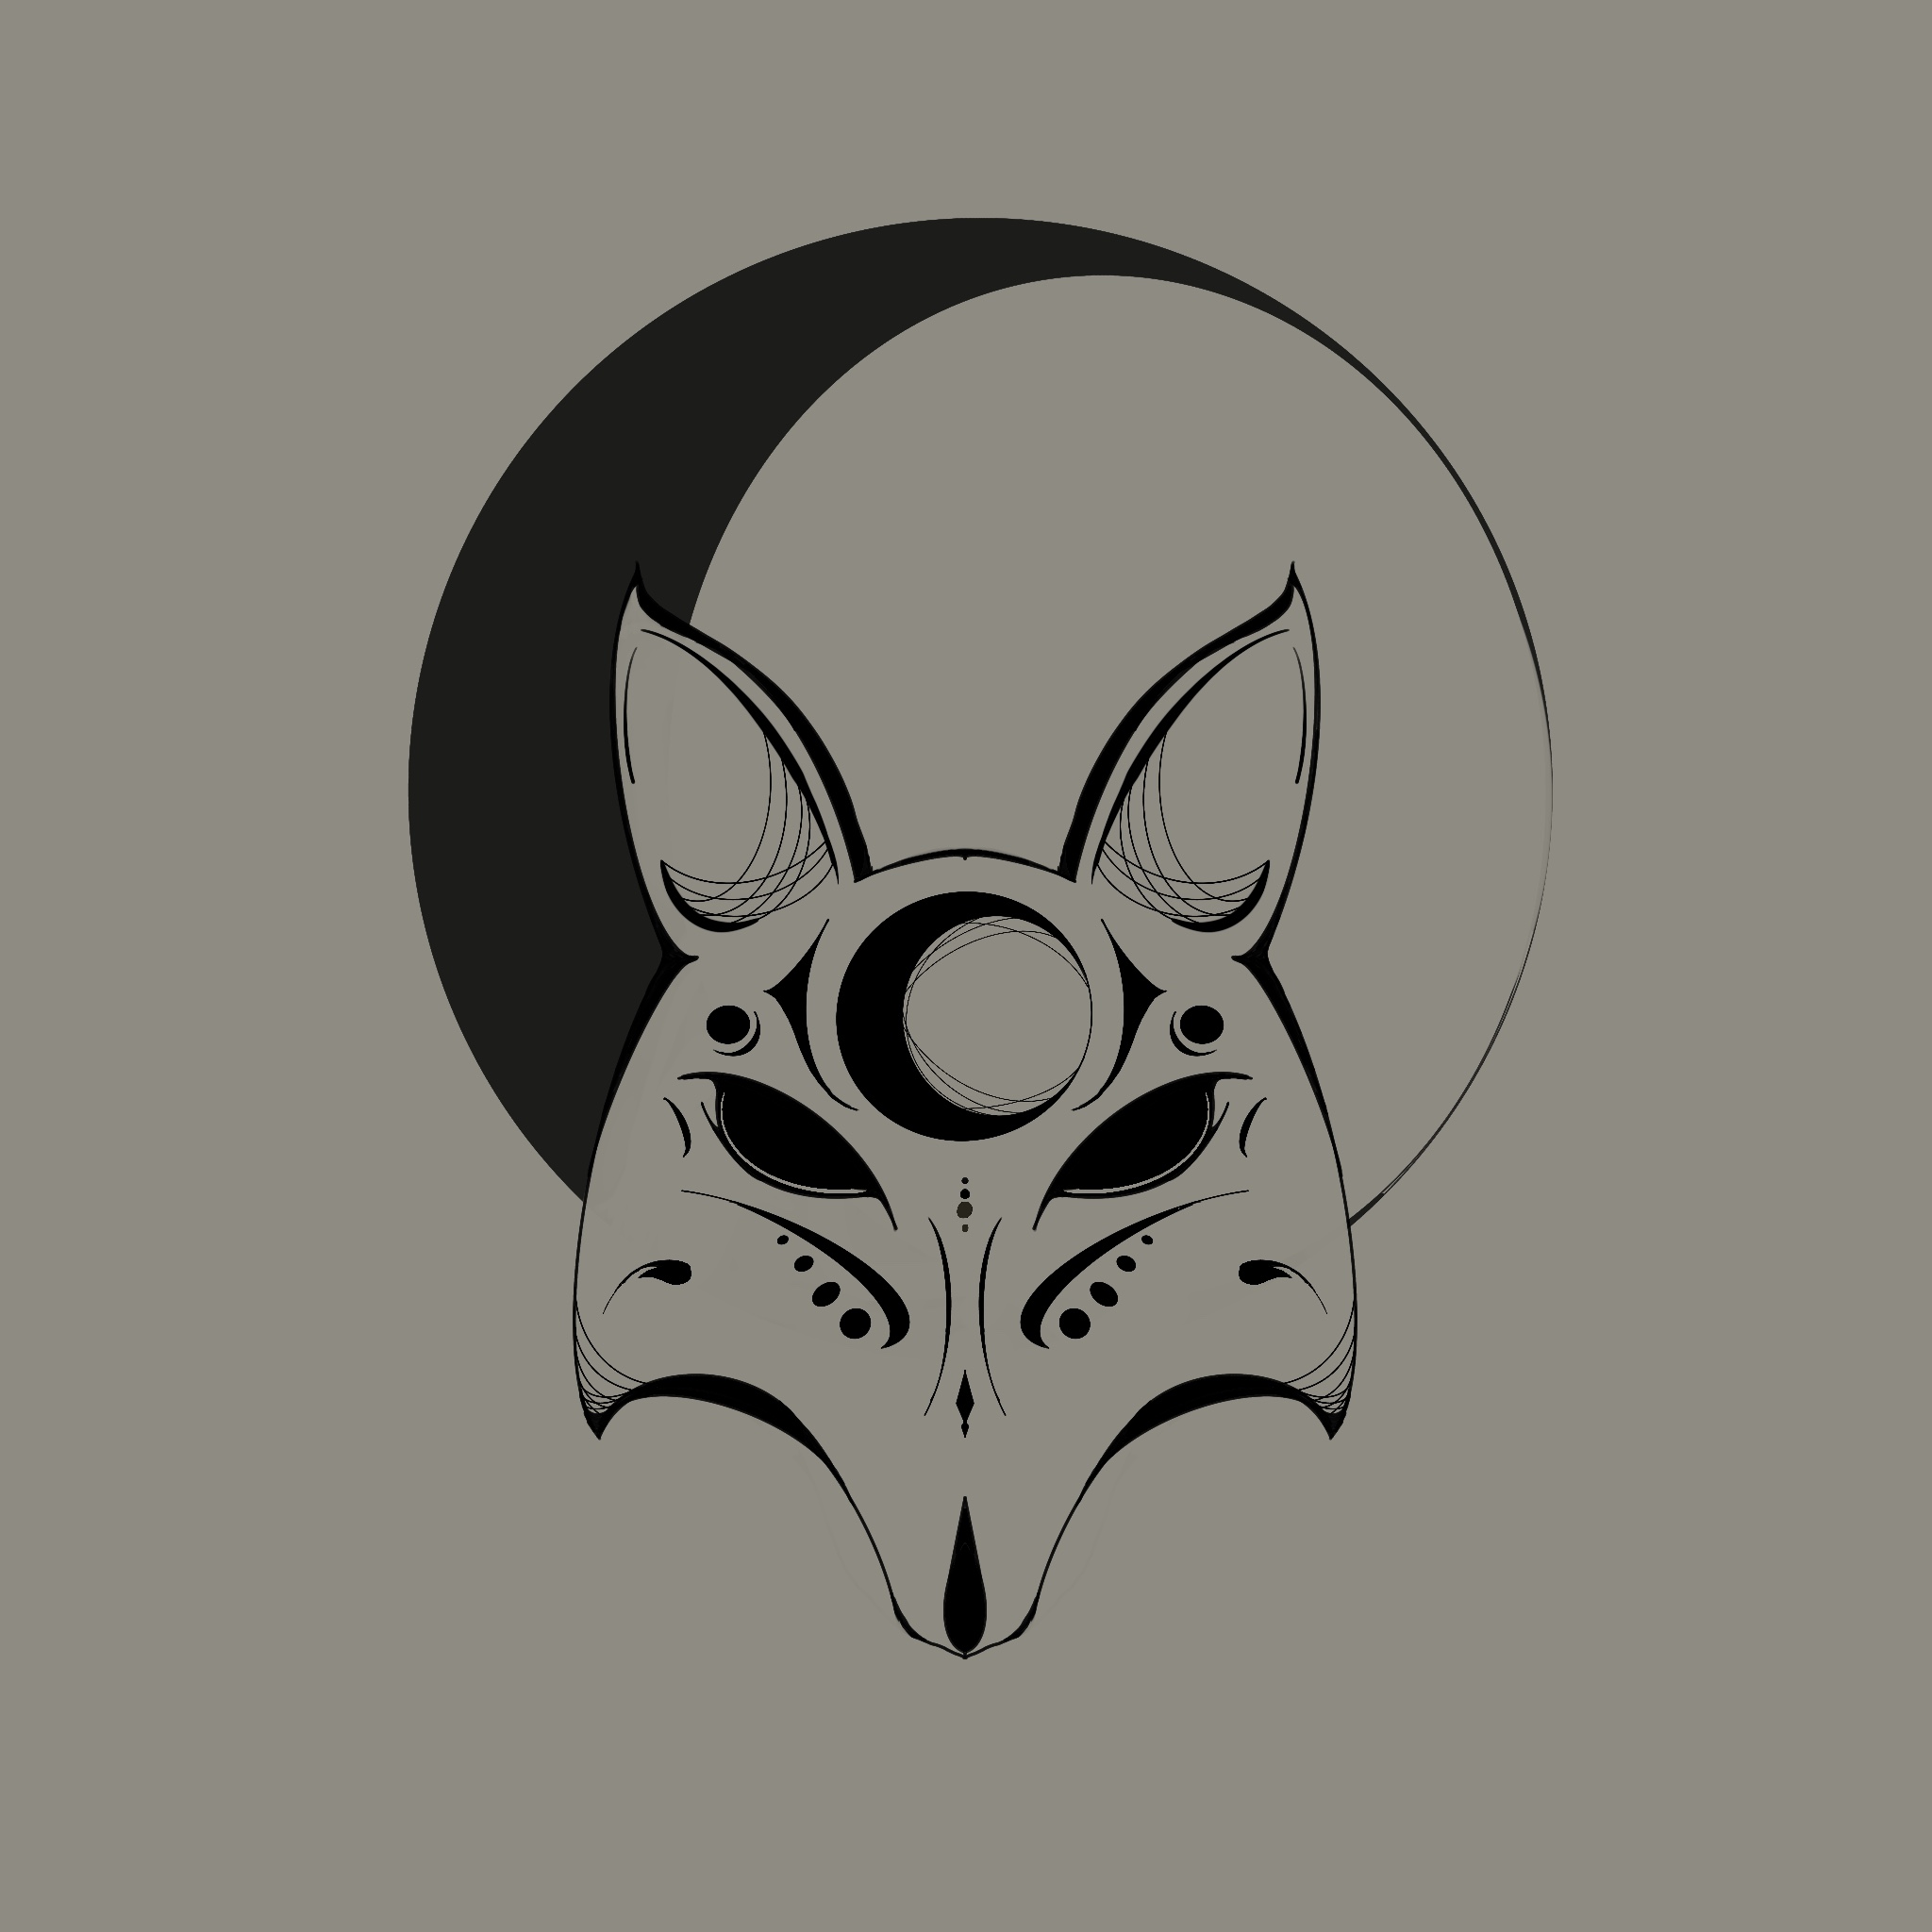 Kitsune mask in black on grey background